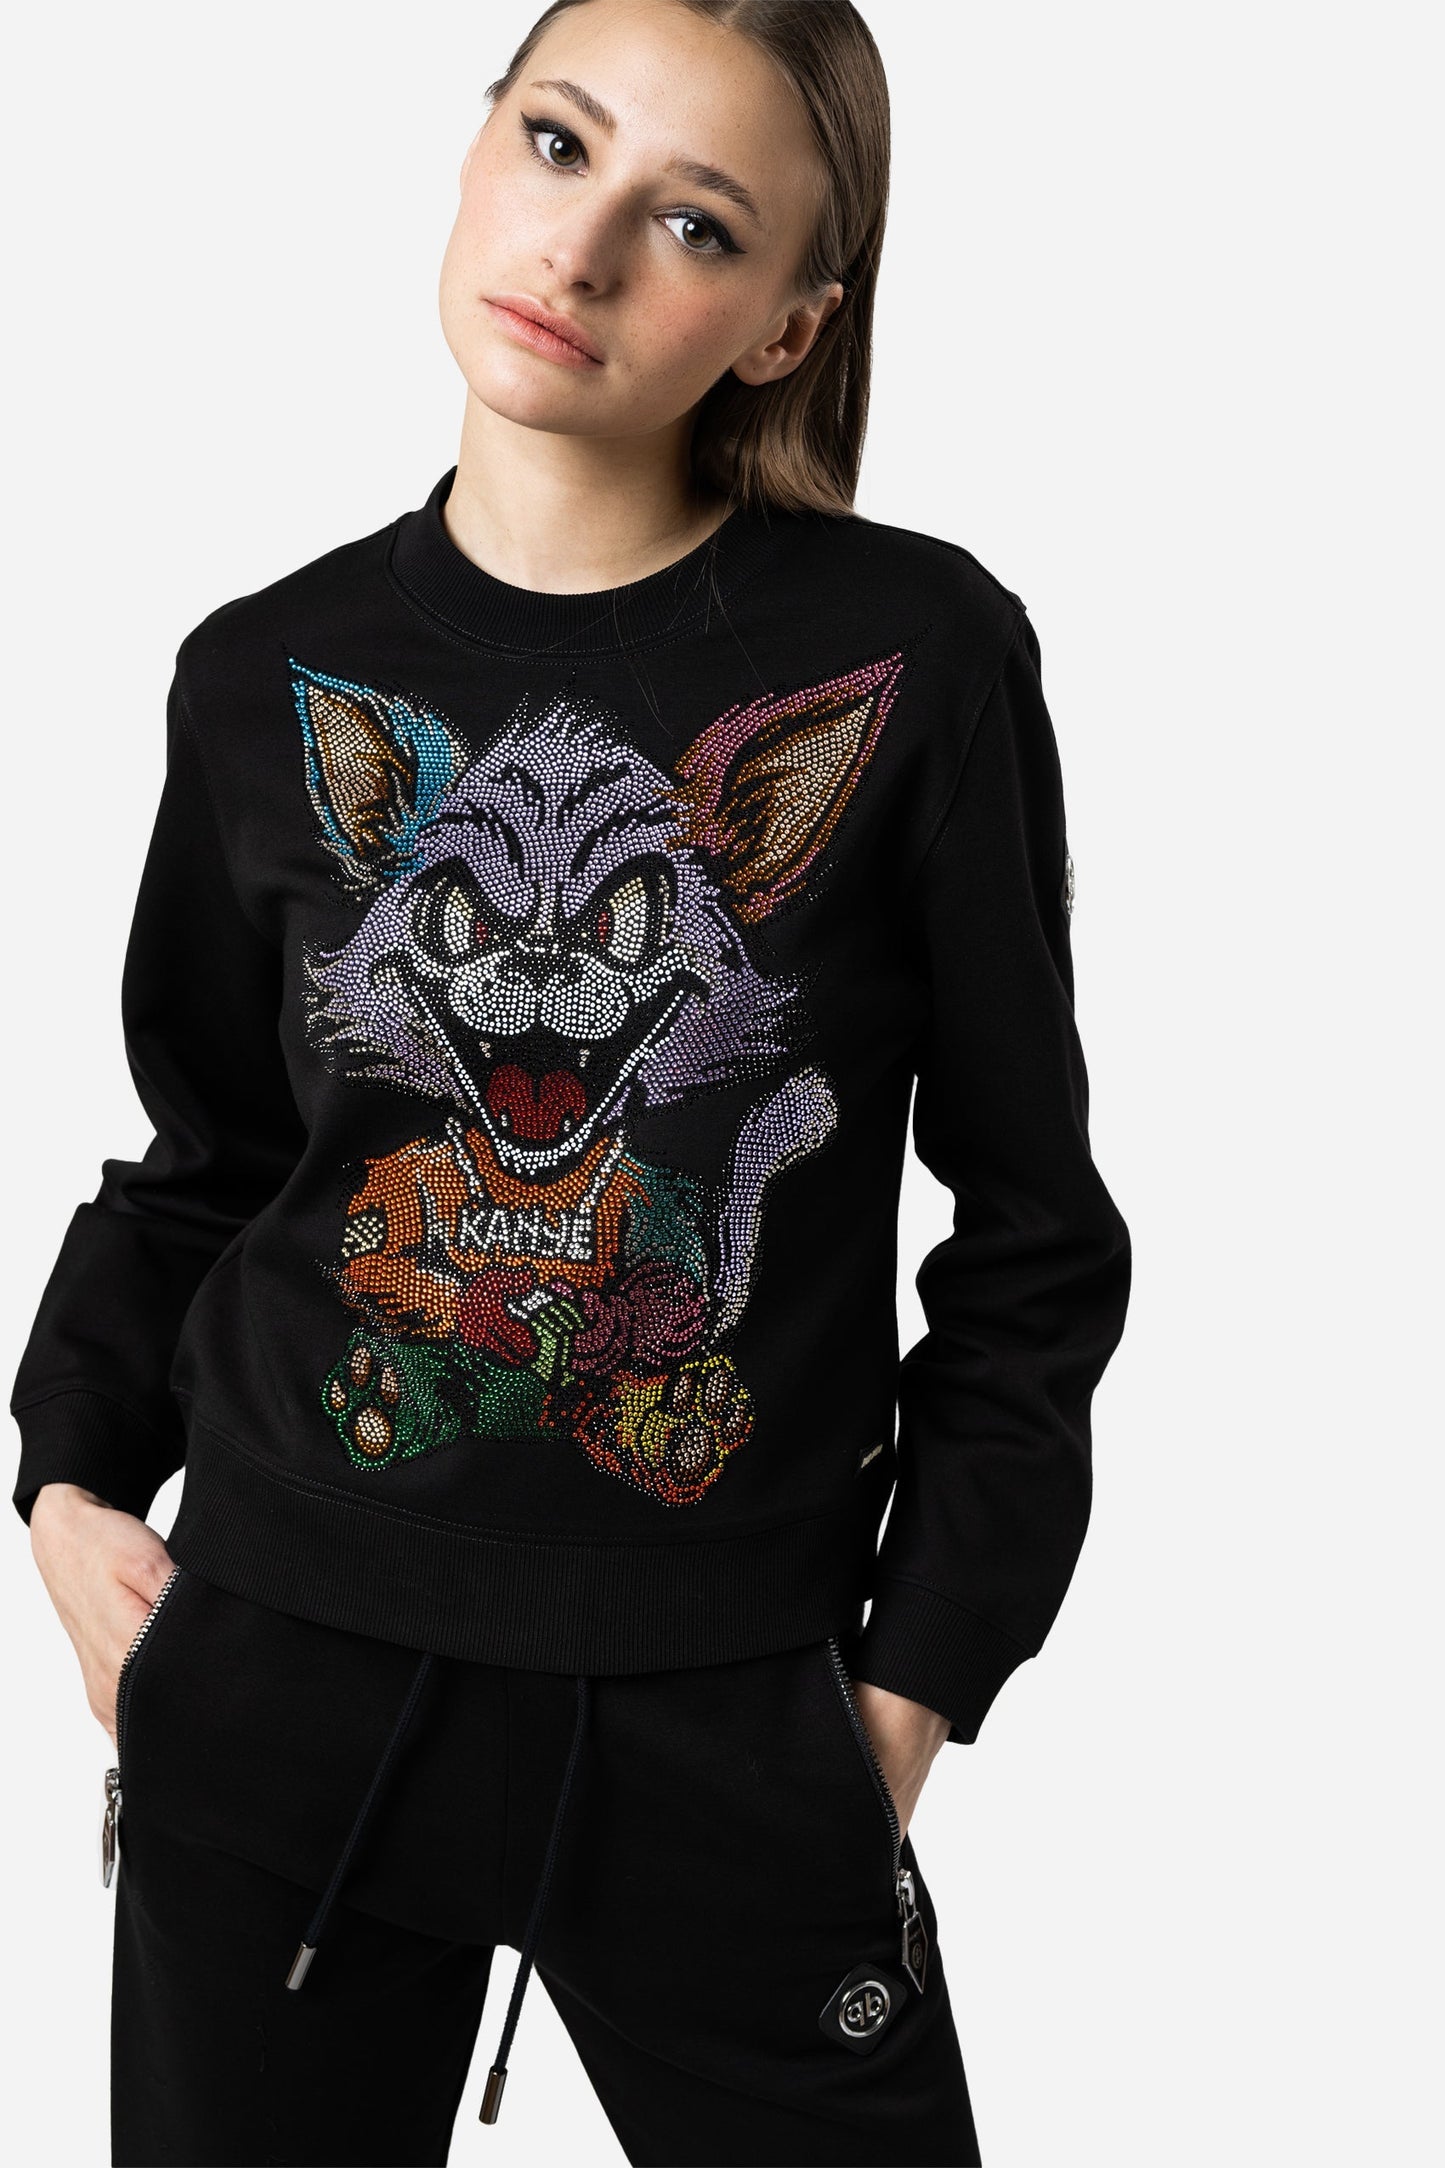 Crystal Rainbow Kanye Sweatshirt - Limited to 300